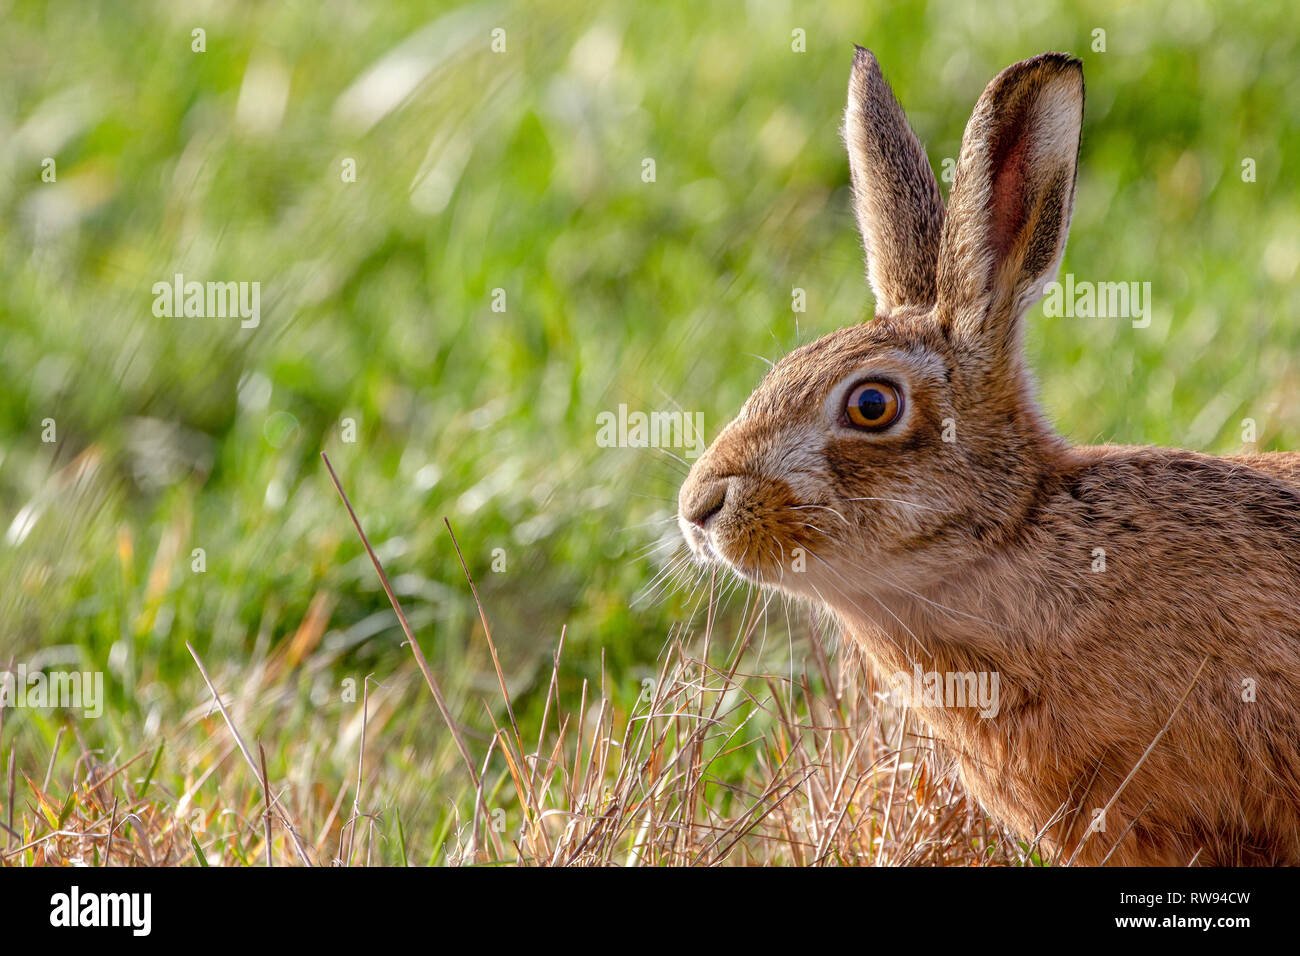 European Brown Hare (Lepus europaeus) in summer farmland setting, United Kingdom Stock Photo